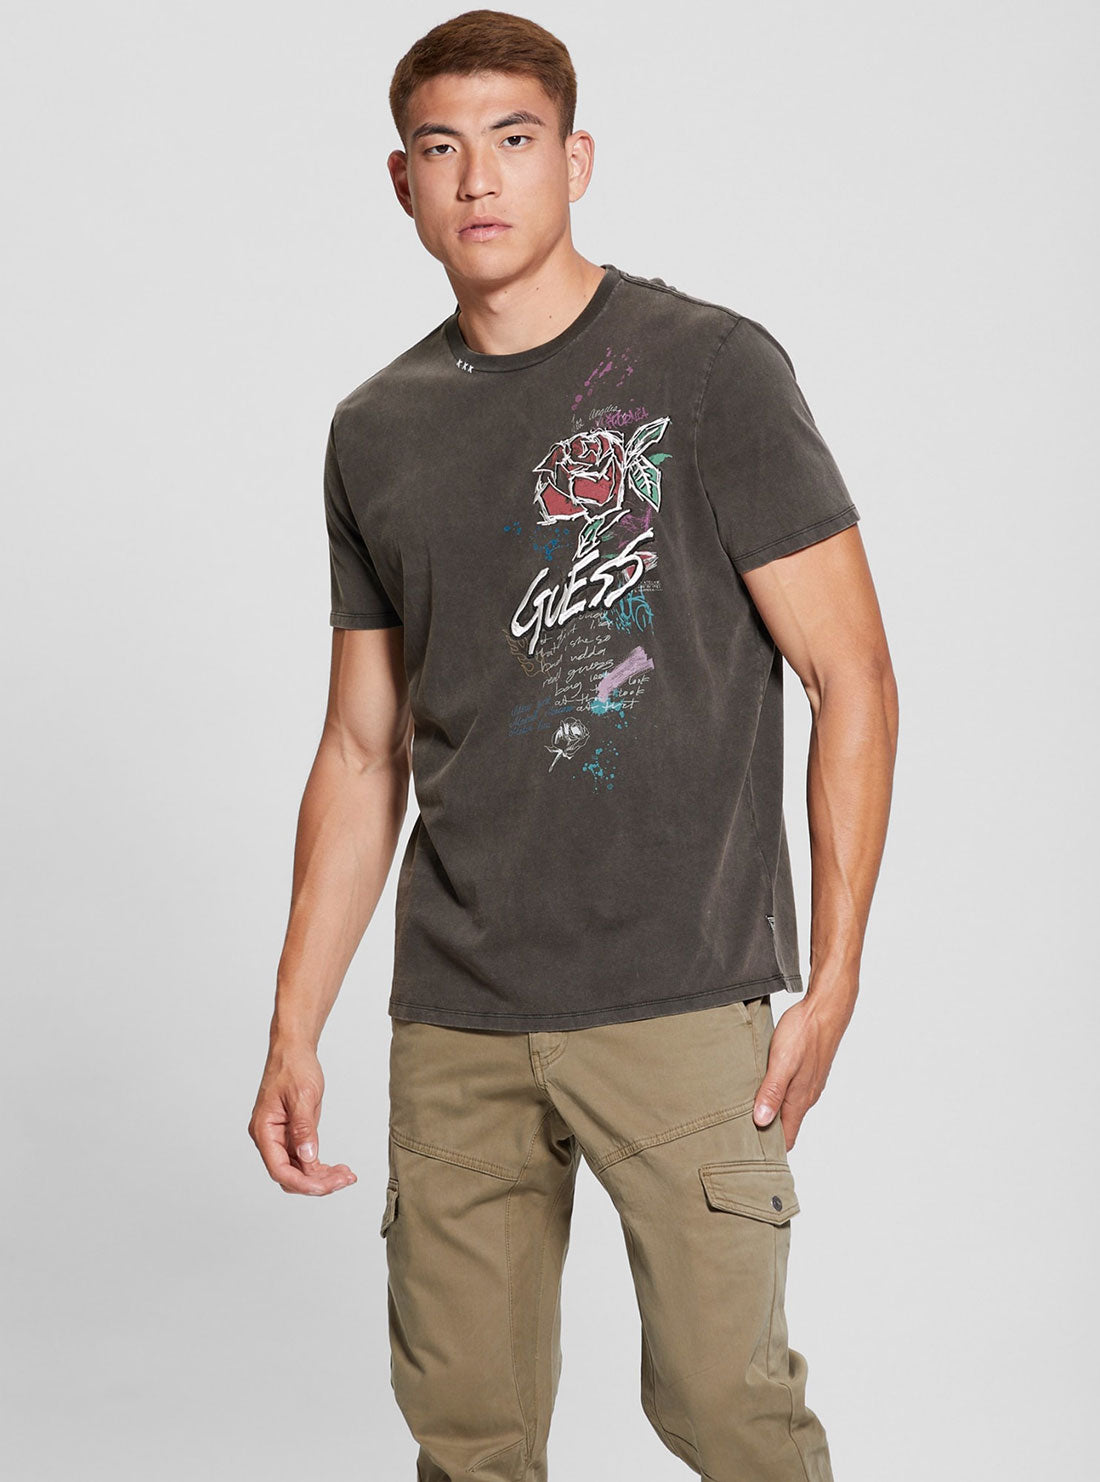 Black Washed Graffiti Rose T-Shirt | GUESS Men's | Front view